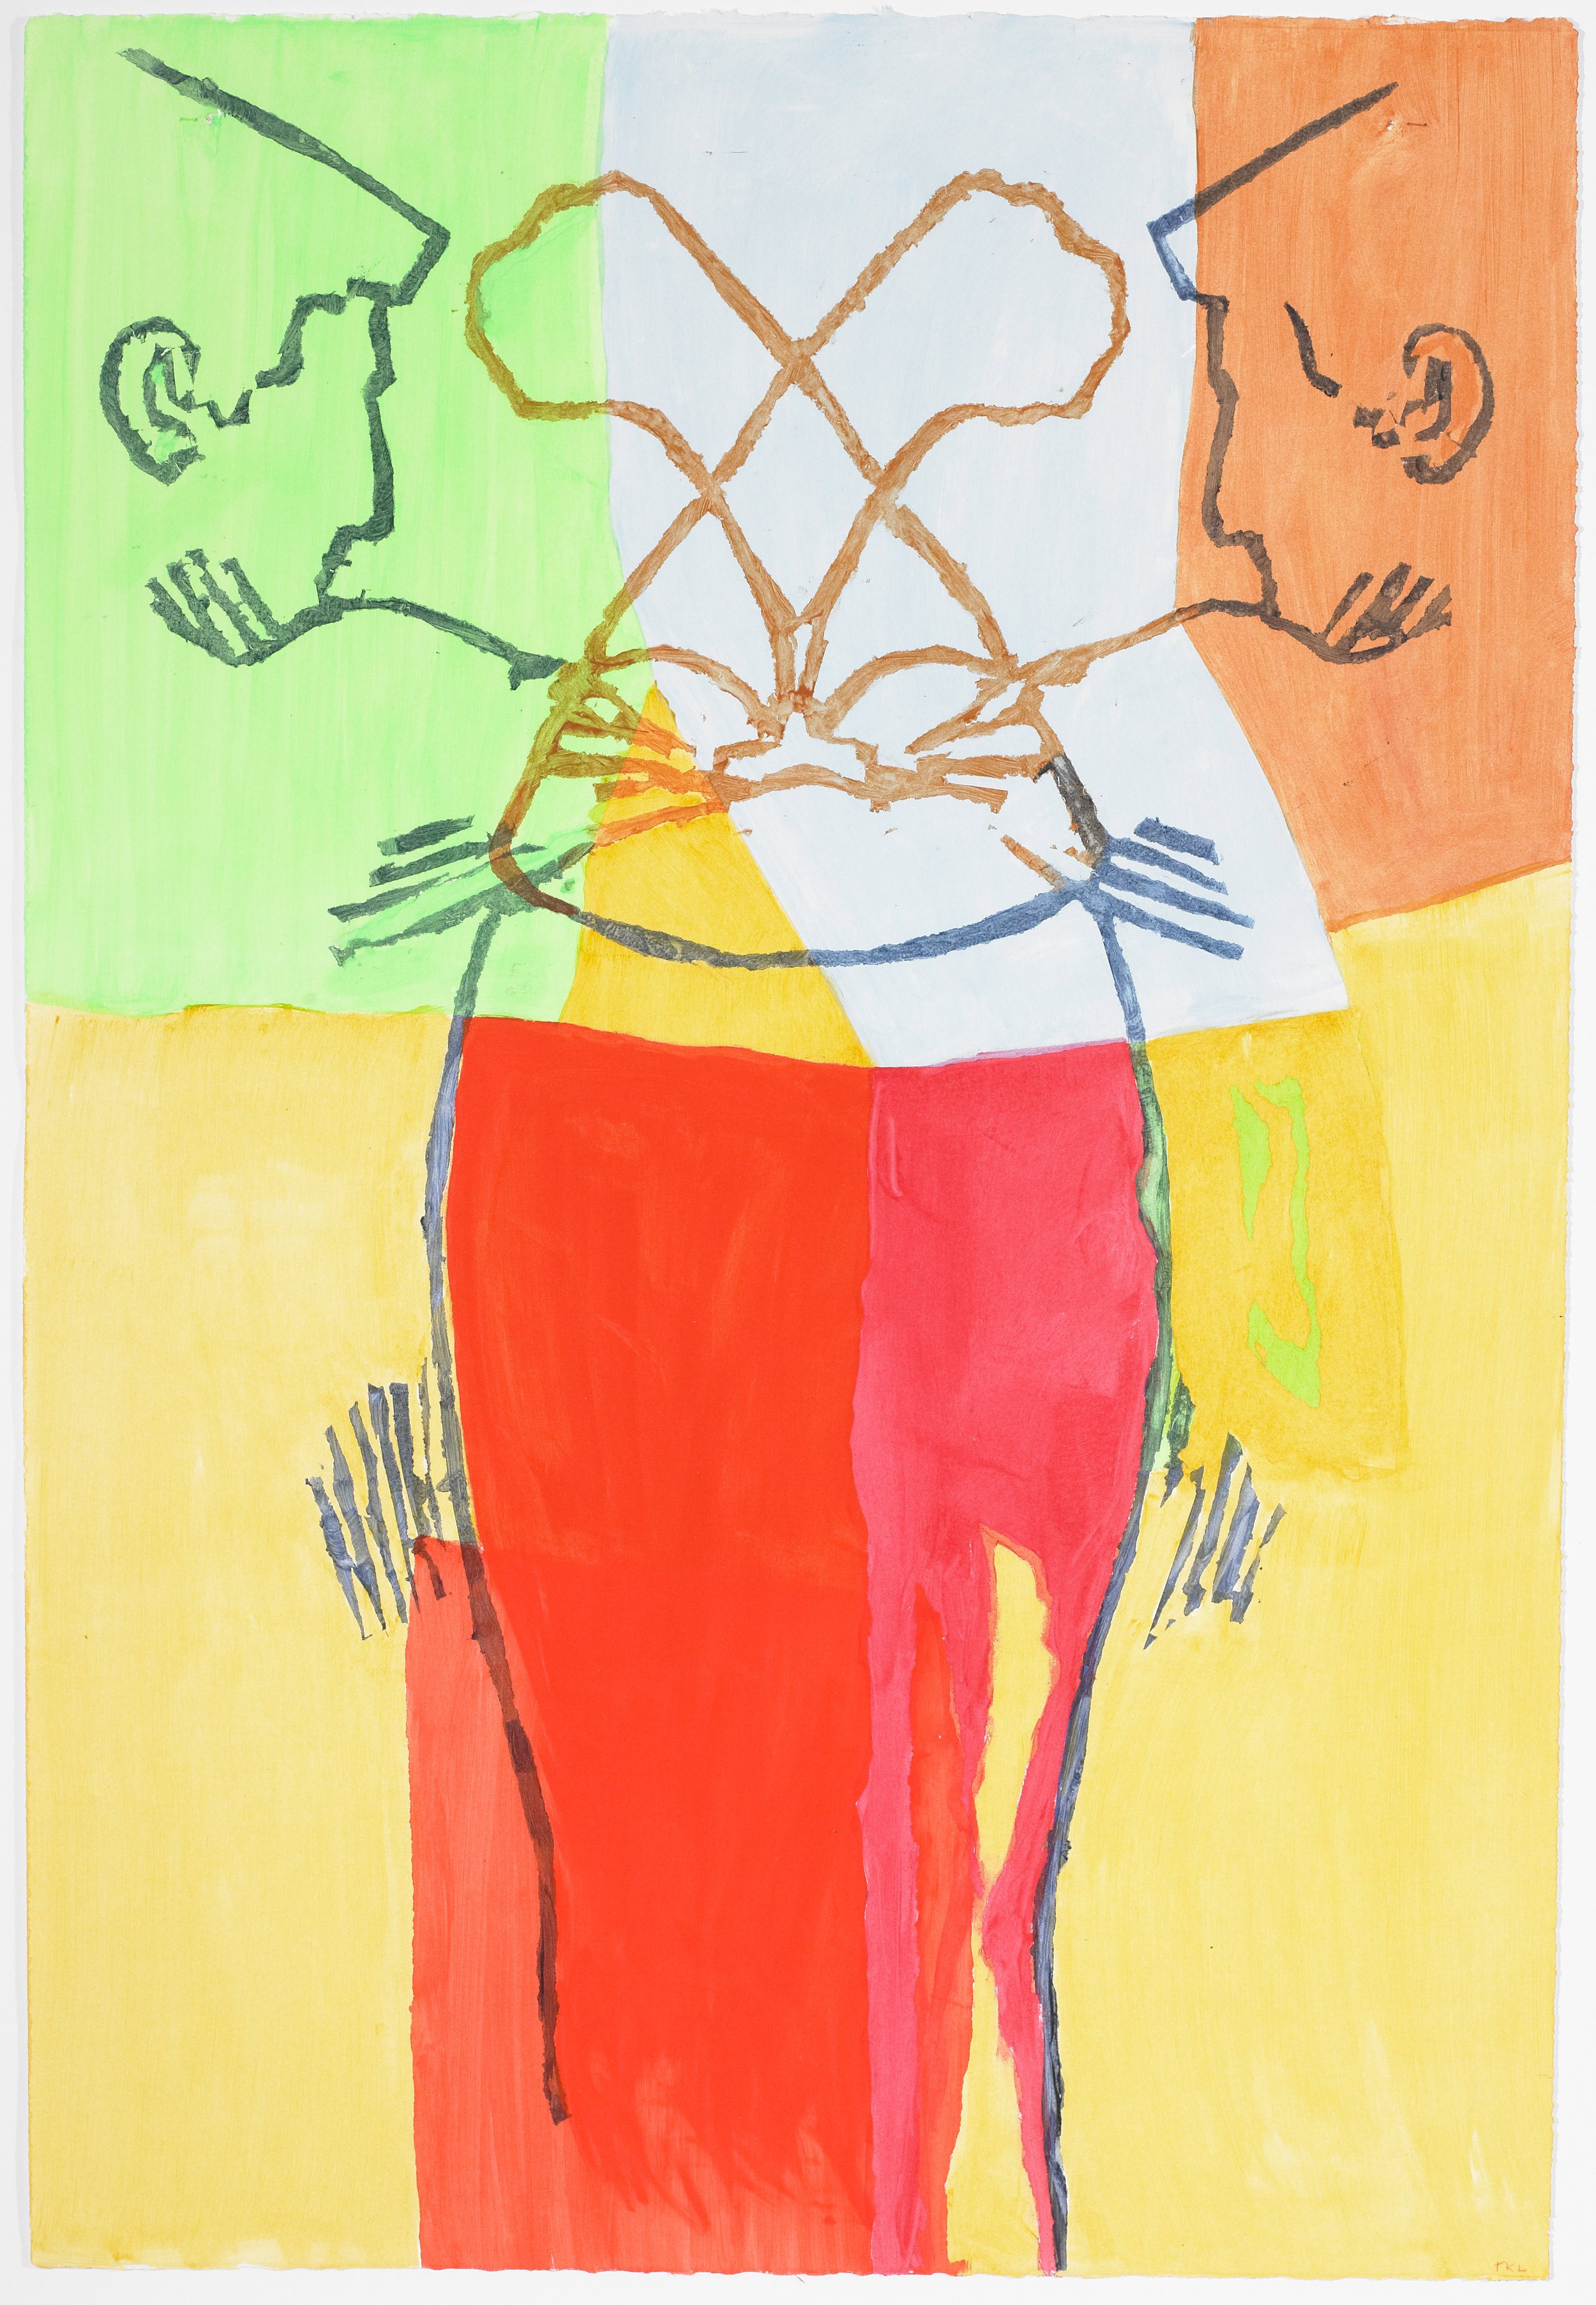   Pessoa Double 1 , acrylic on paper, 2016 